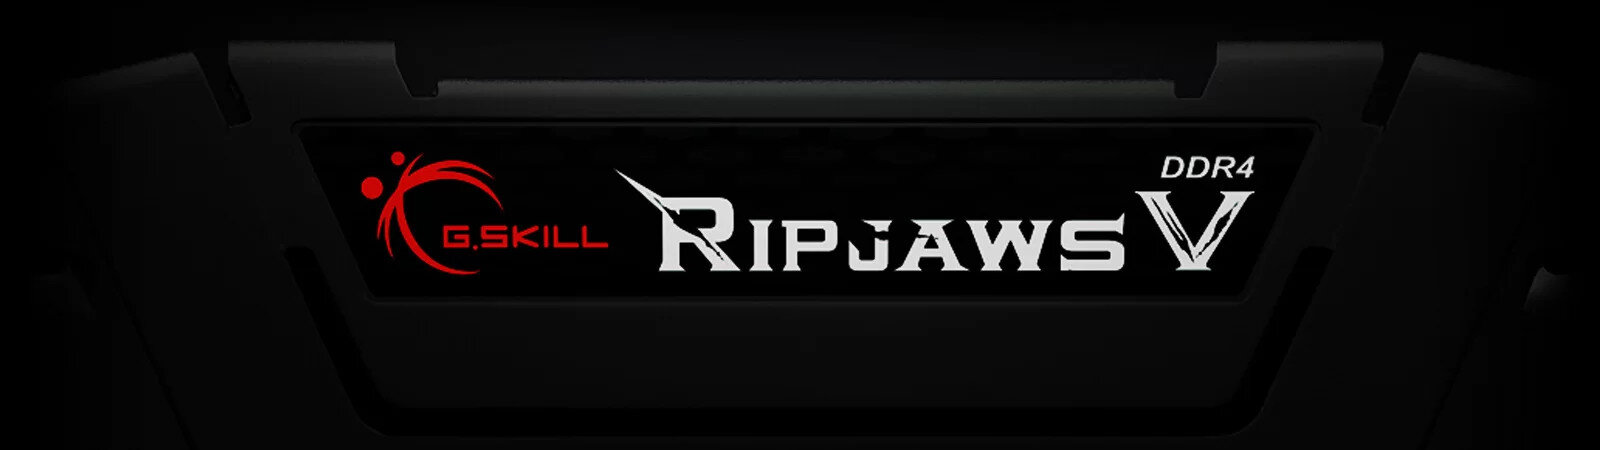 Pamięć RAM G.SKILL Ripjaws V - gaming 